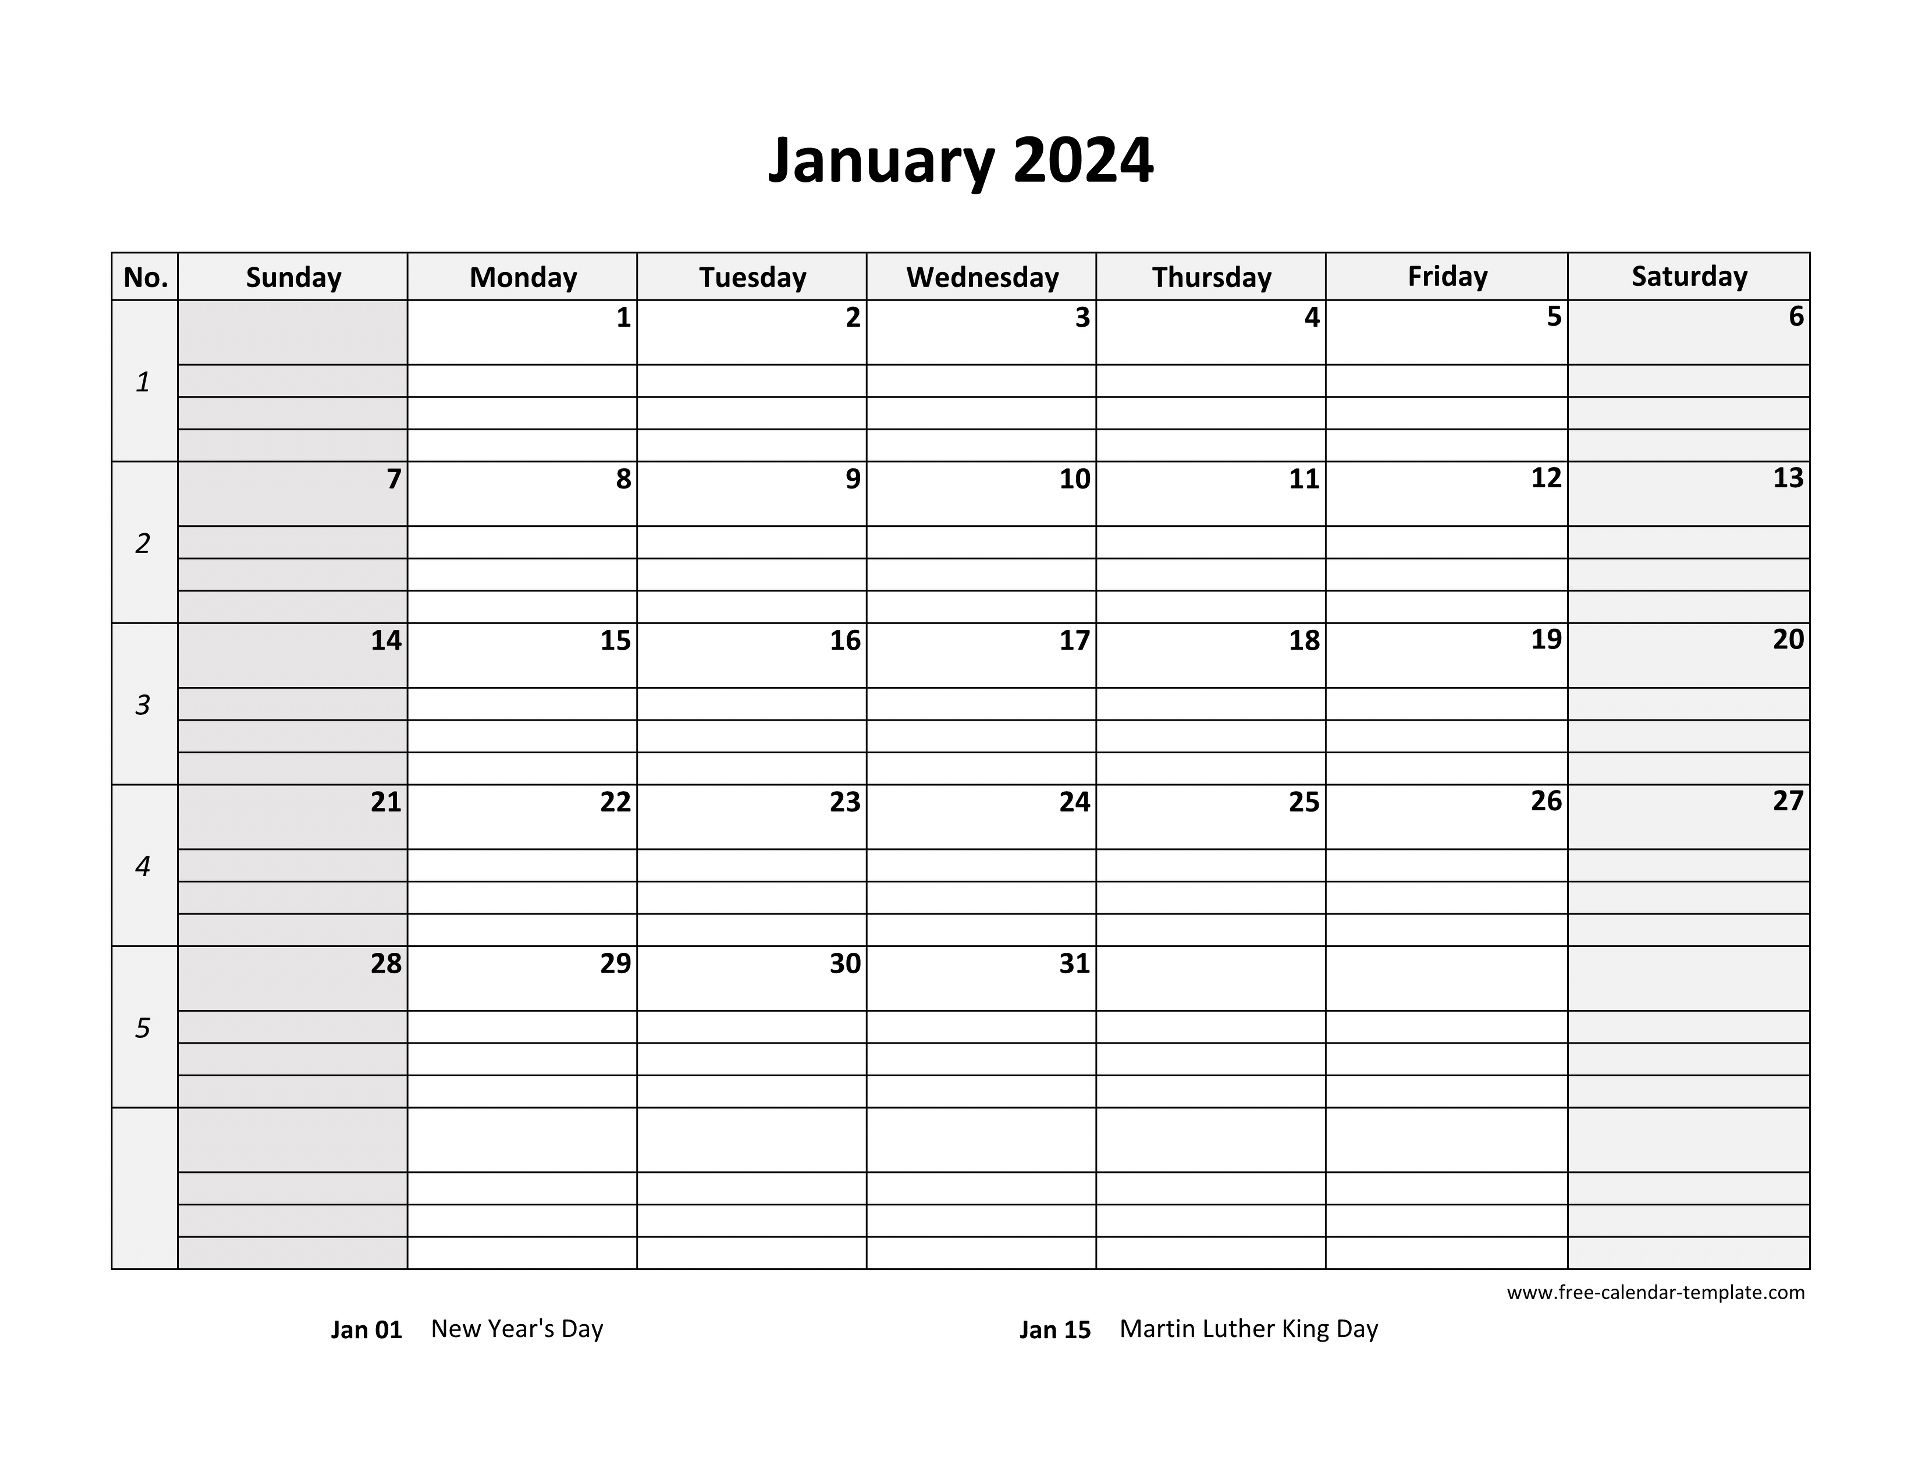 January 2024 Calendar Free Printable With Grid Lines Designed for January 2024 Calendar Printable With Lines